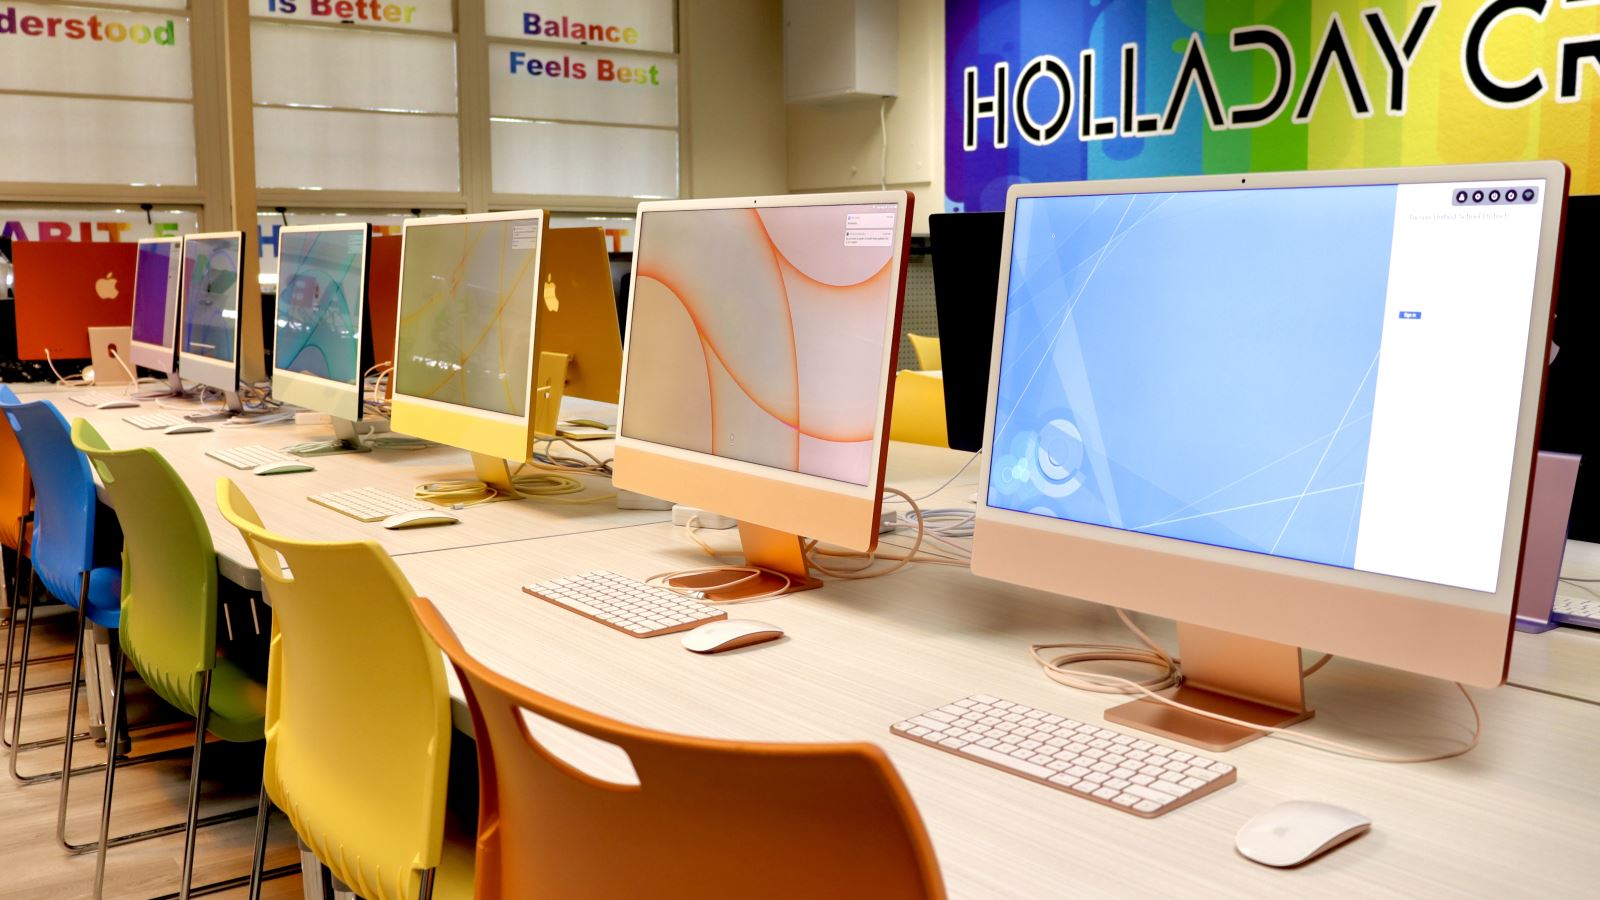 Holladay computer lab